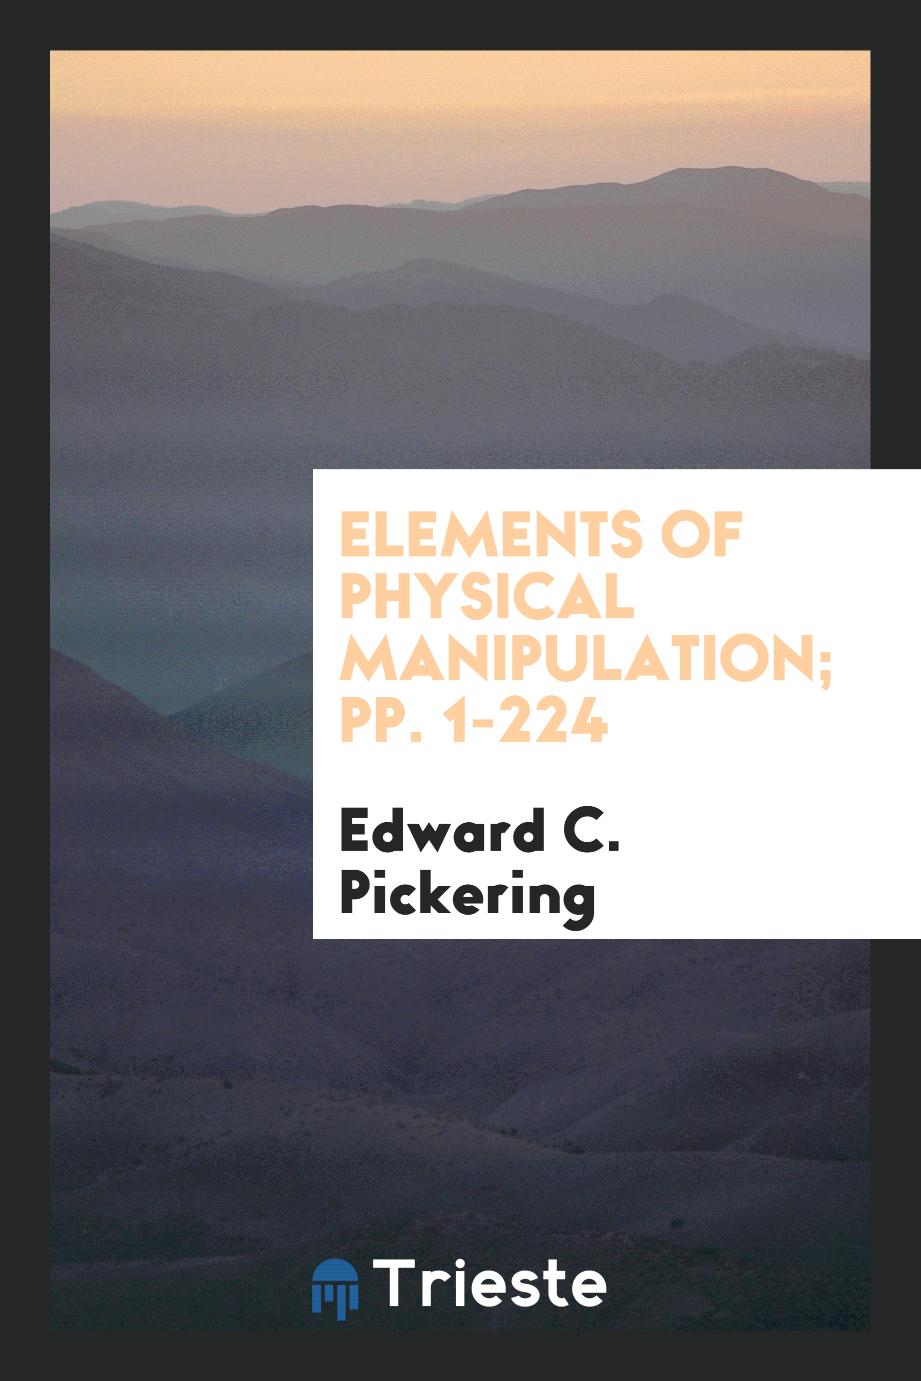 Edward C. Pickering - Elements of Physical Manipulation; pp. 1-224